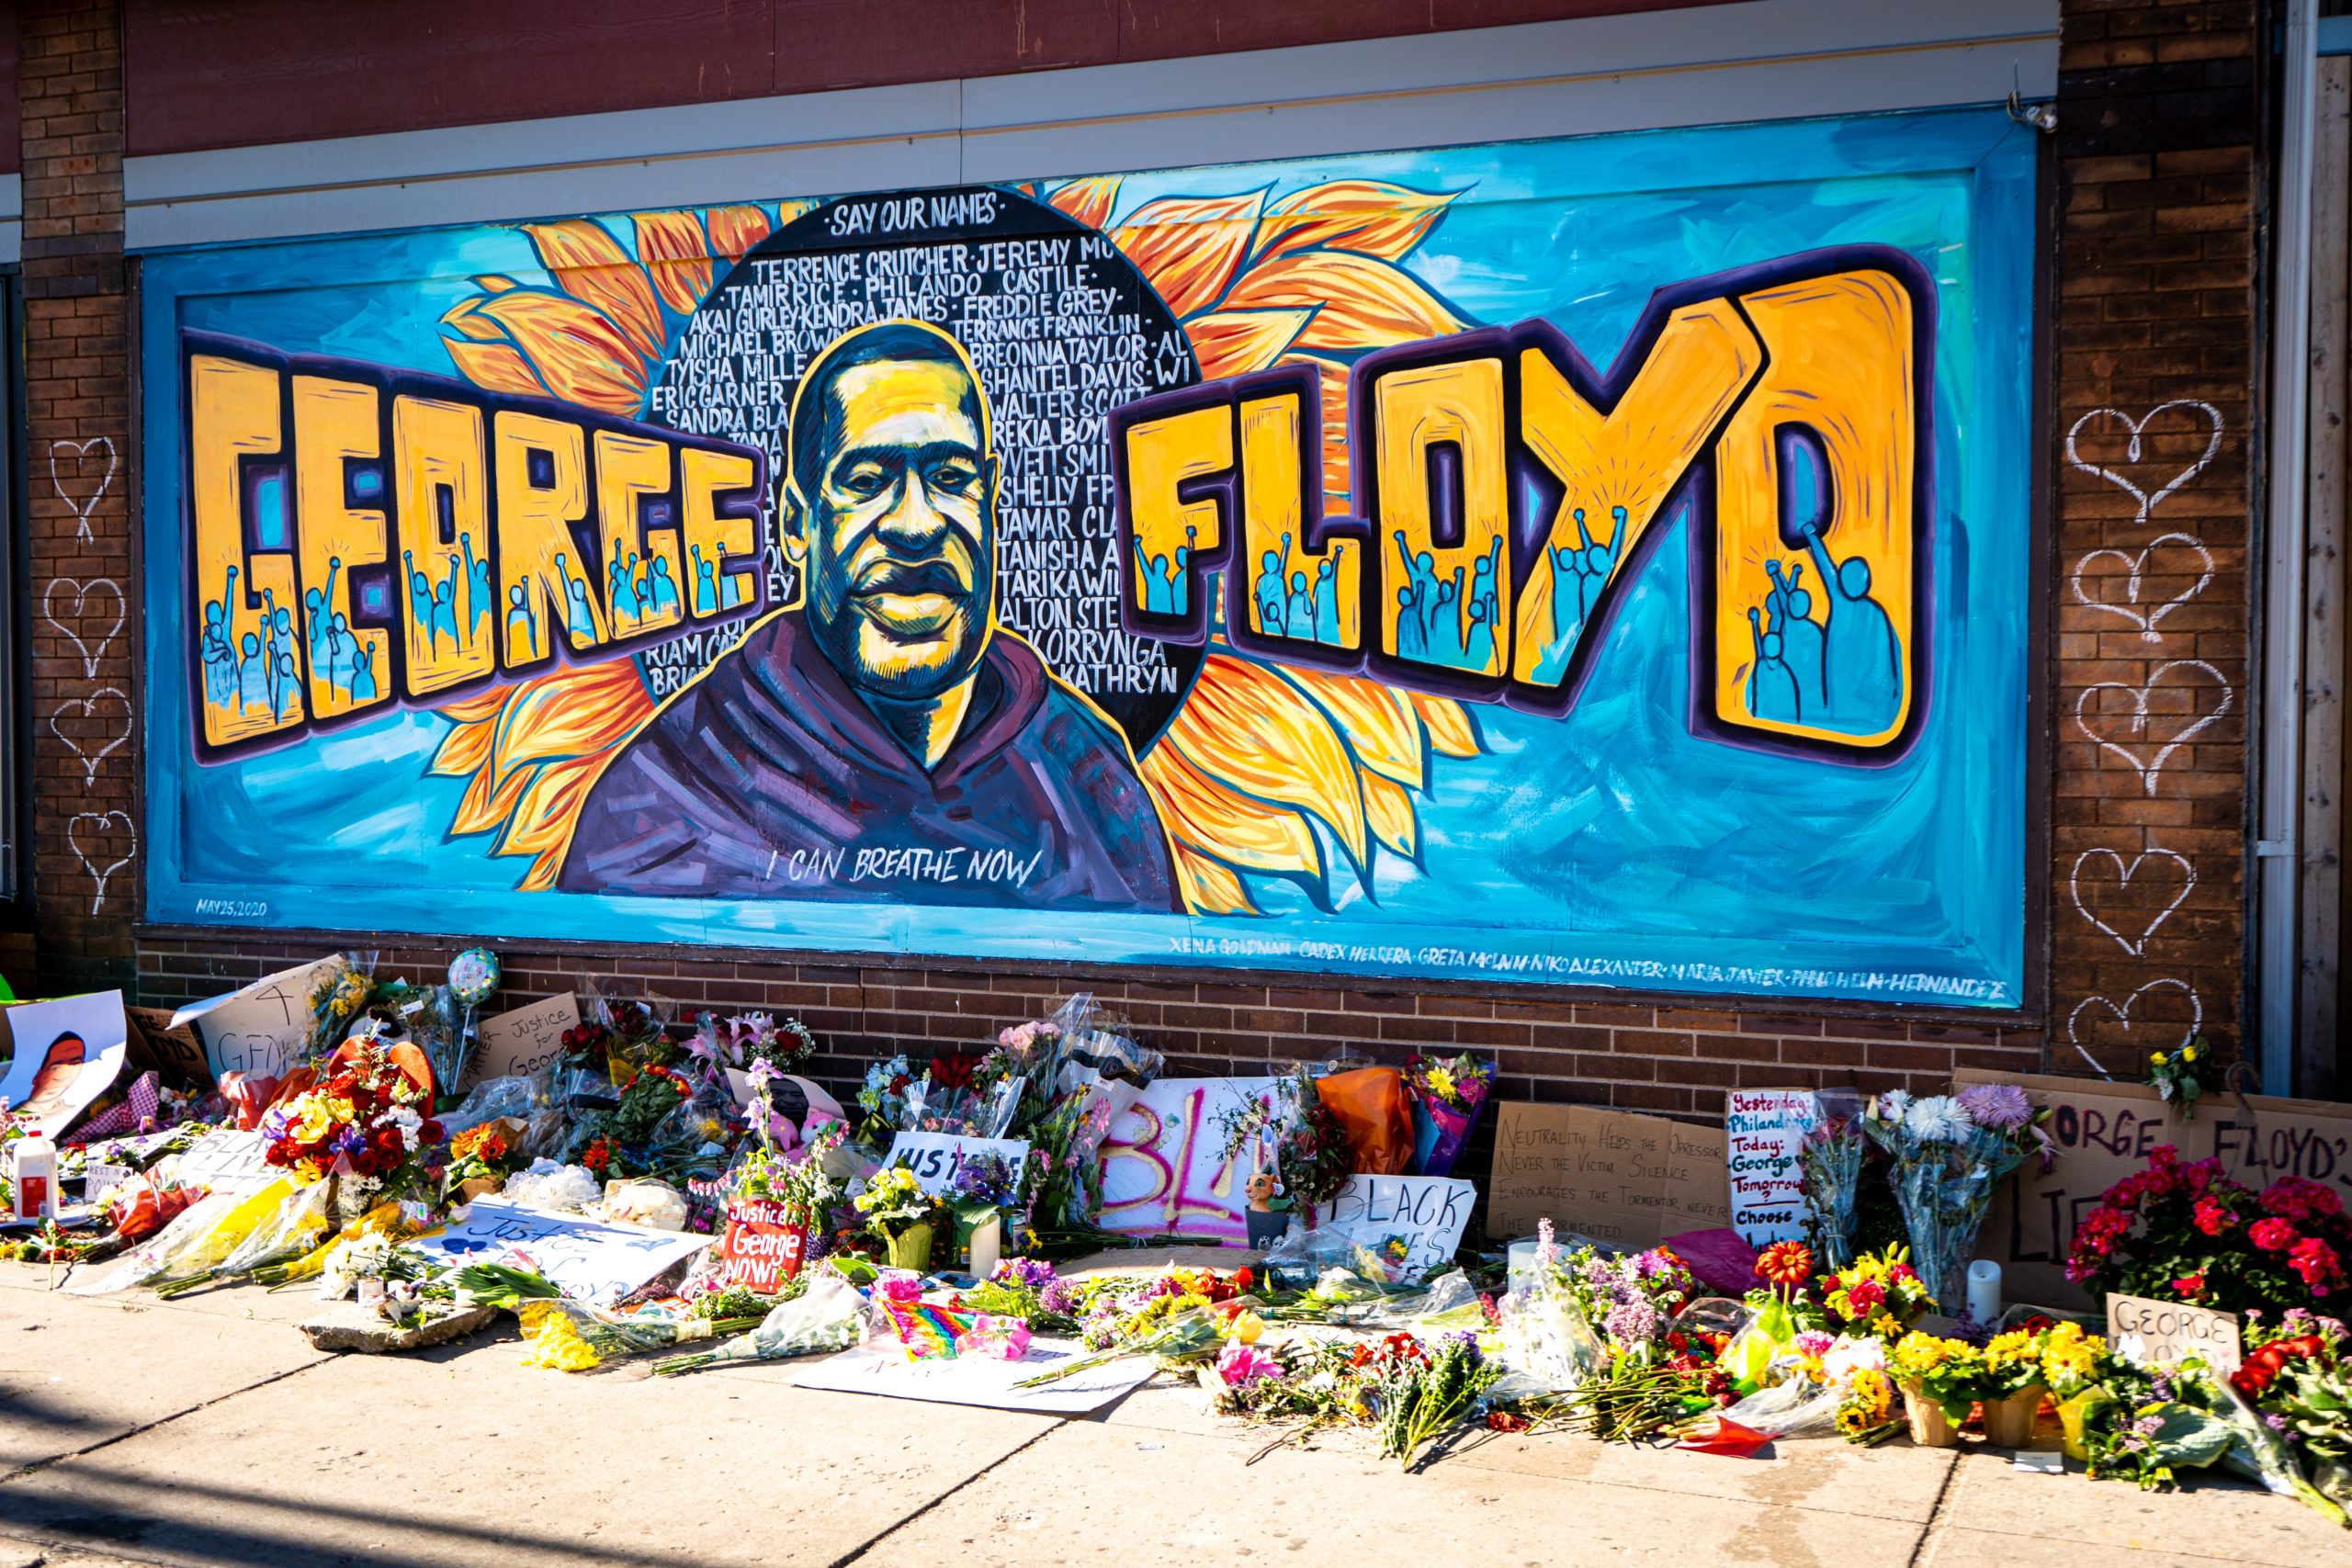 beautiful graffiti mural honoring george floyd from black lives matter protest. Revolution.